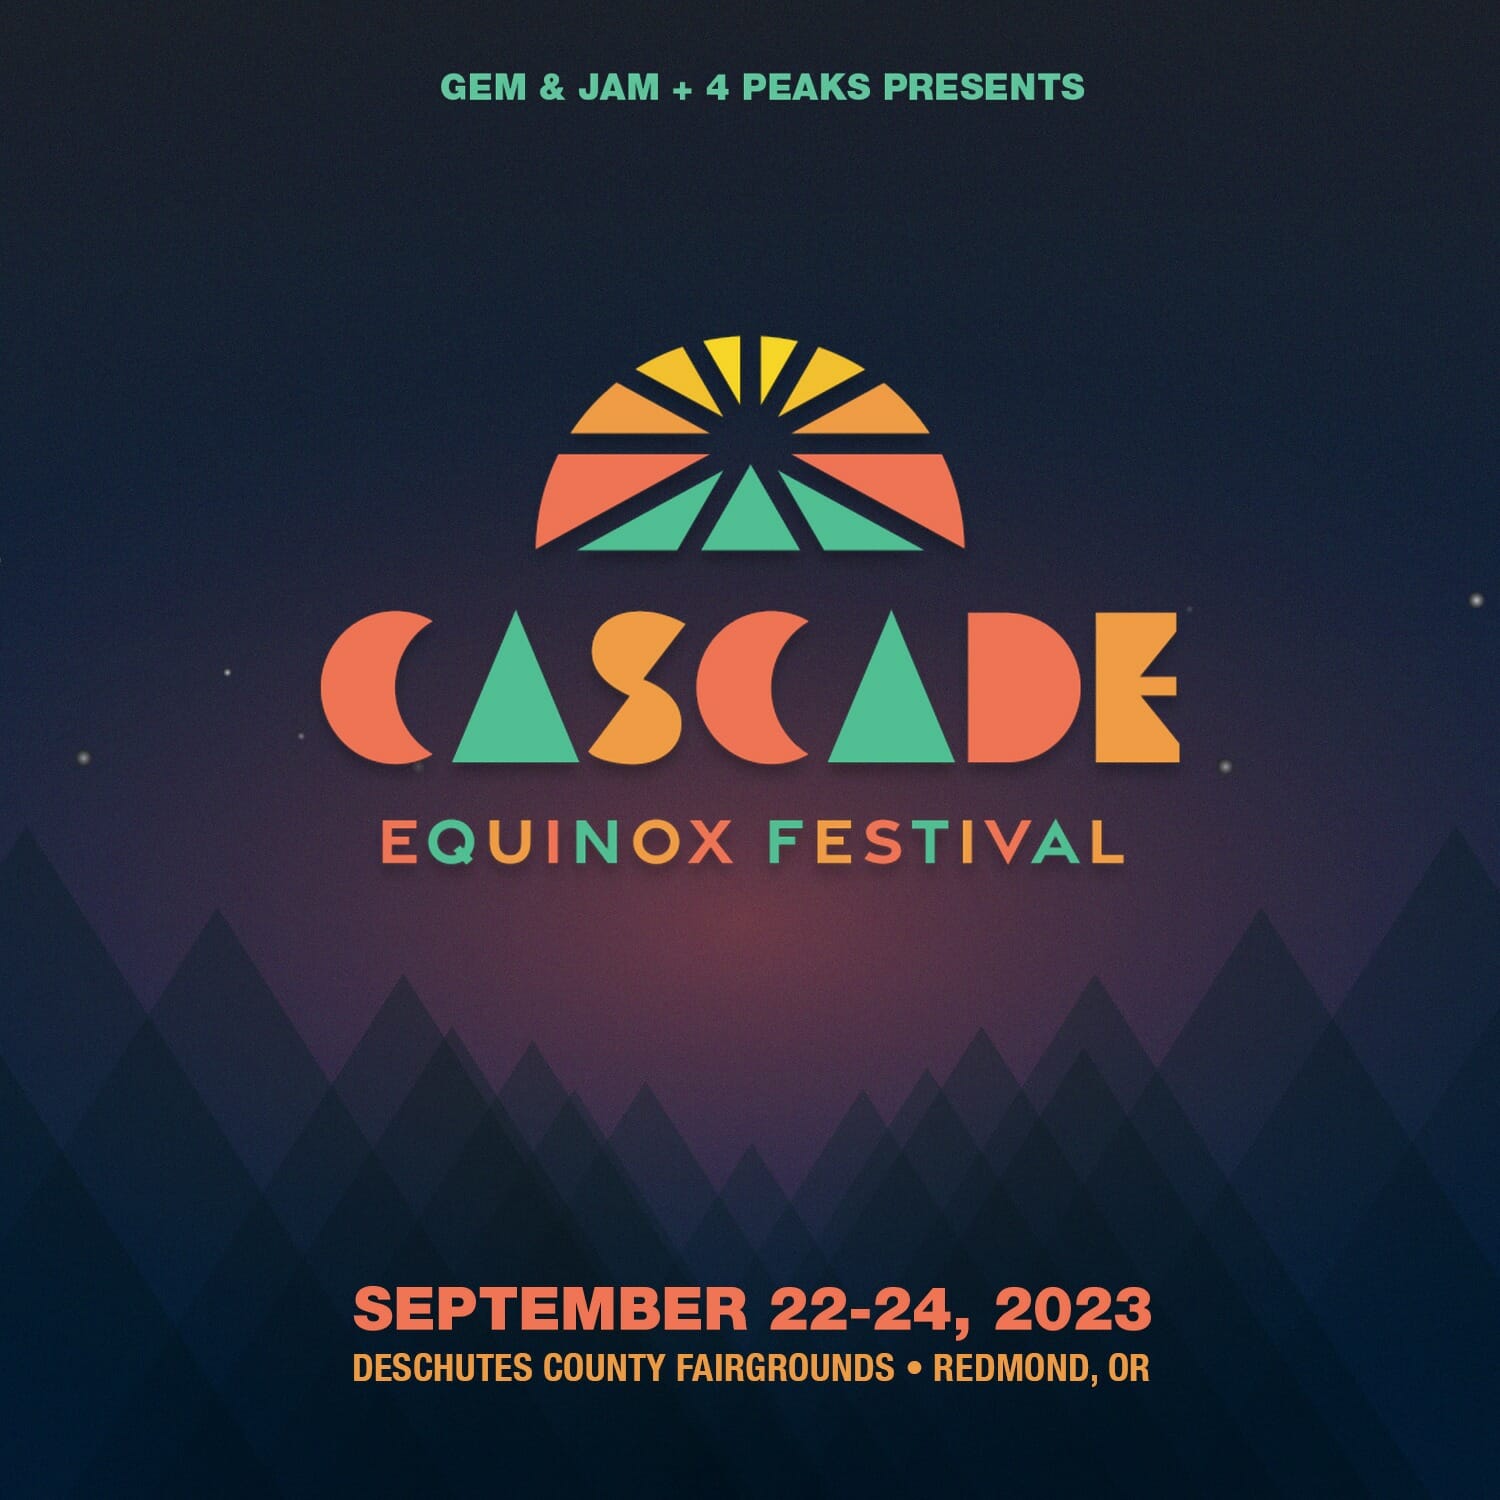 Cascade Equinox Festival Outlines Inaugural Artist Lineup: Pretty Lights, Goose, Big Wild and More